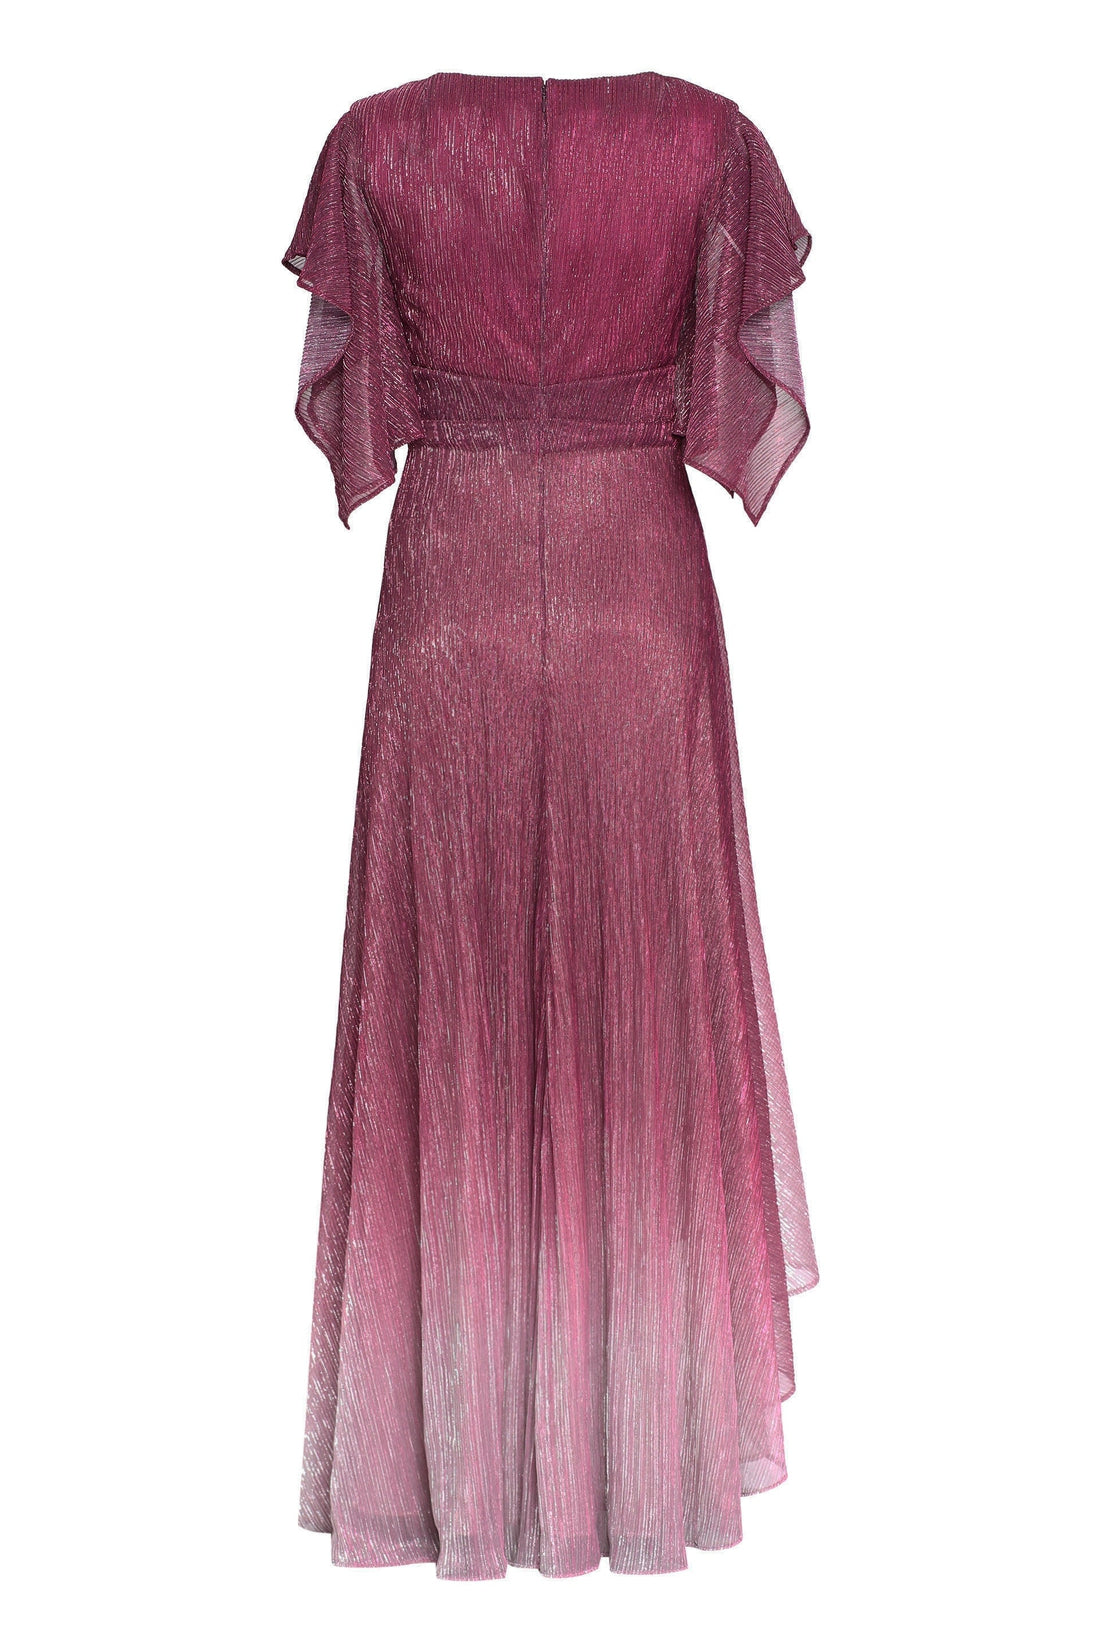 Talbot Runhof-OUTLET-SALE-Lurex draped dress-ARCHIVIST